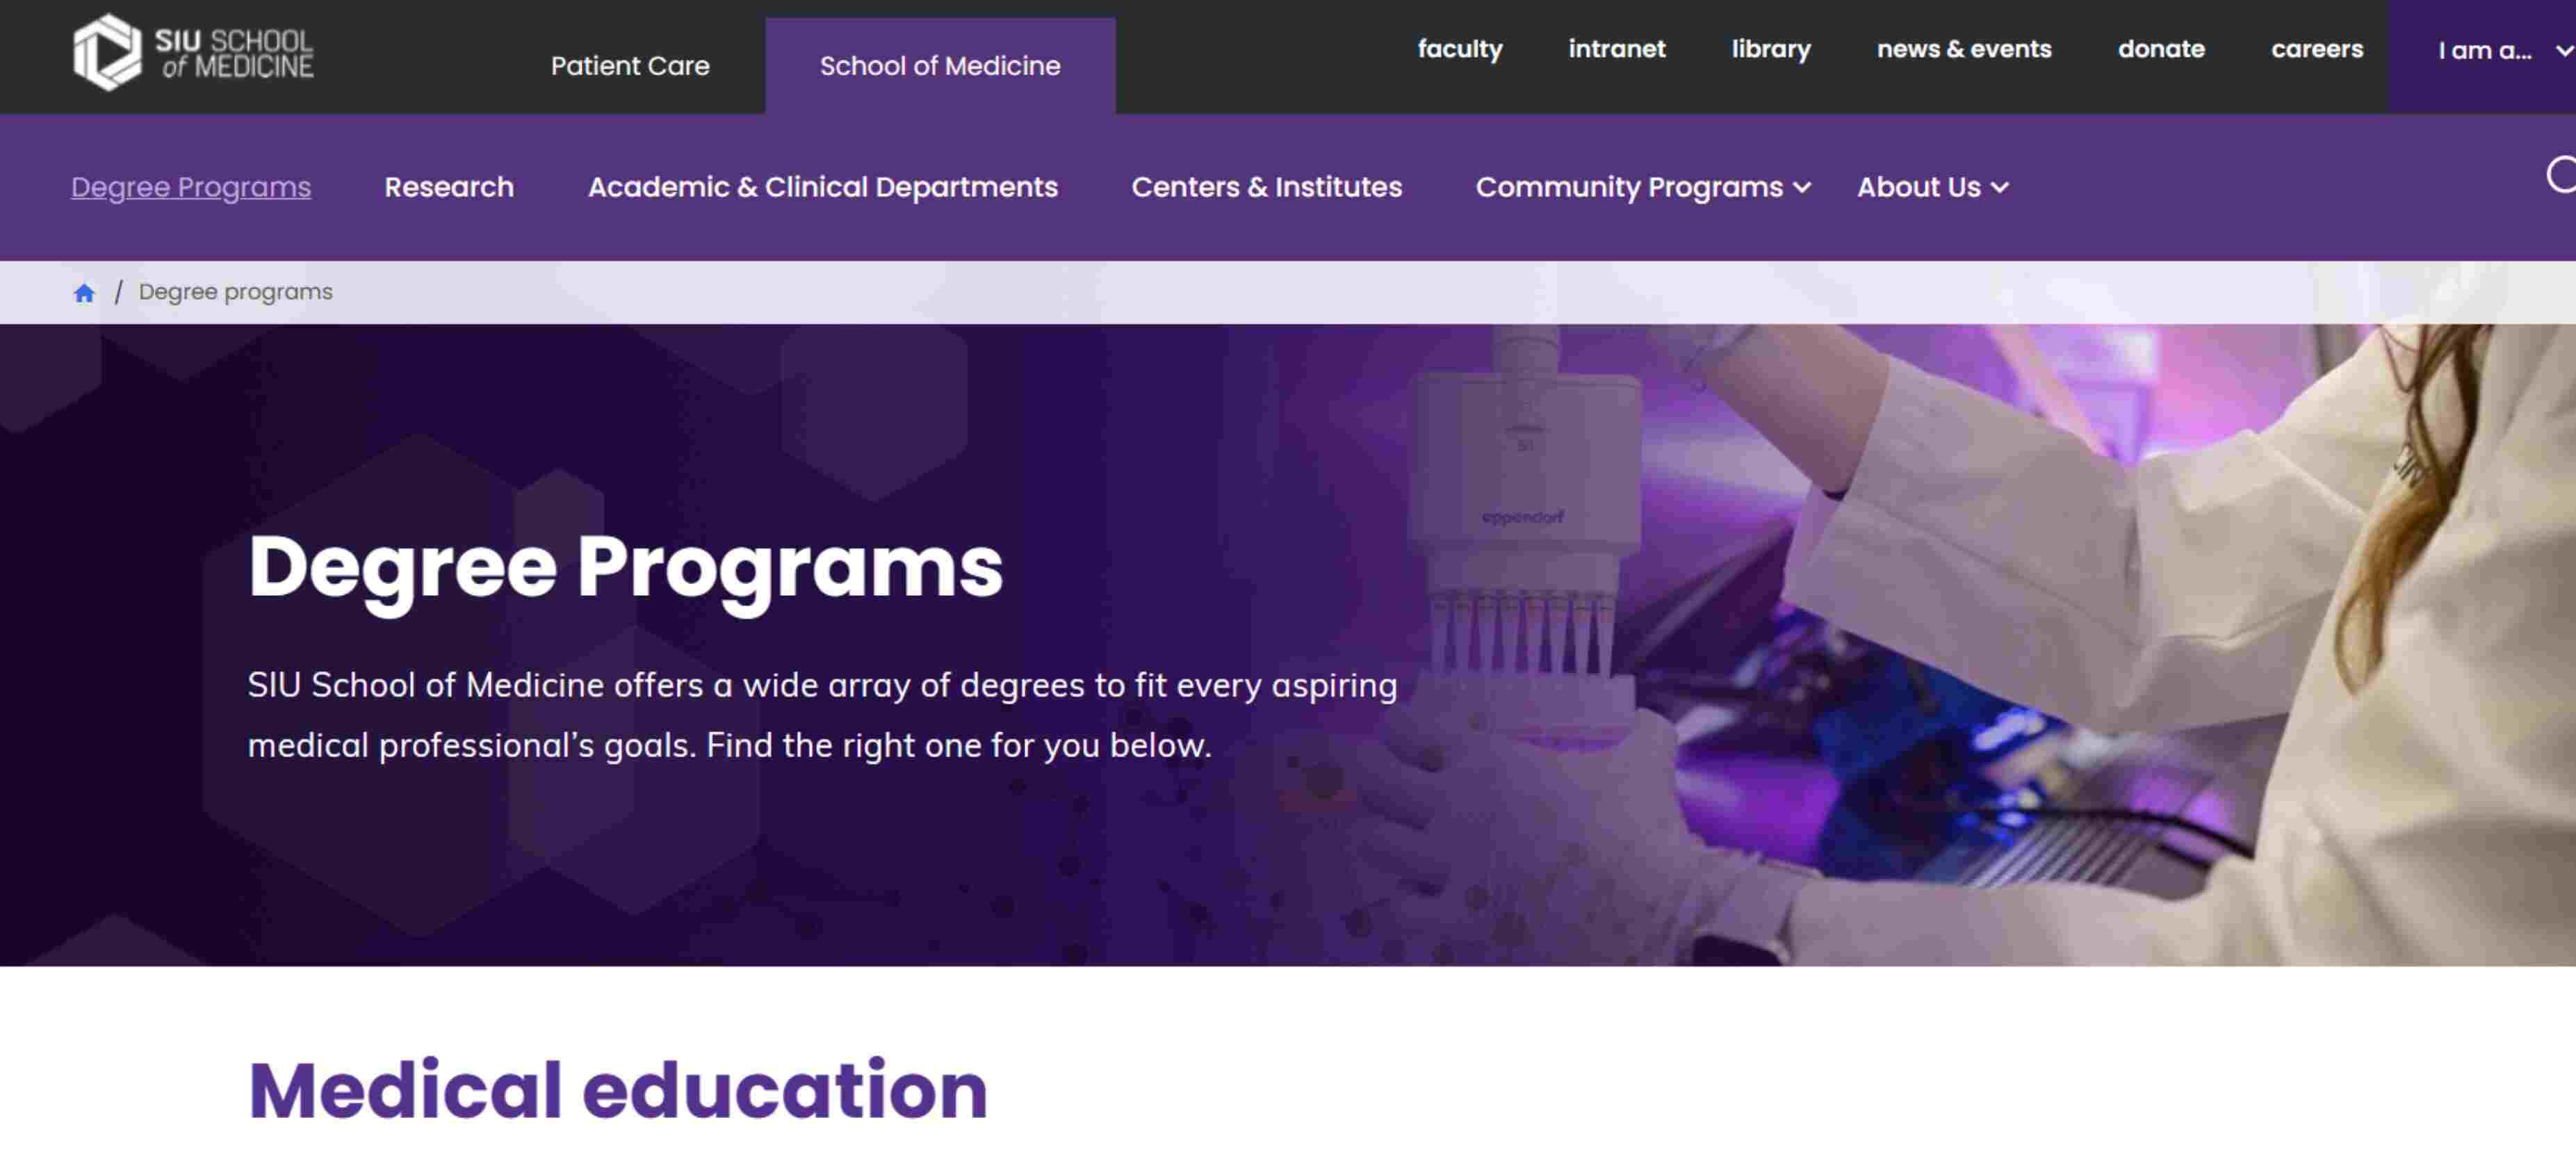 Southern Illinois University School of Medicine homepage